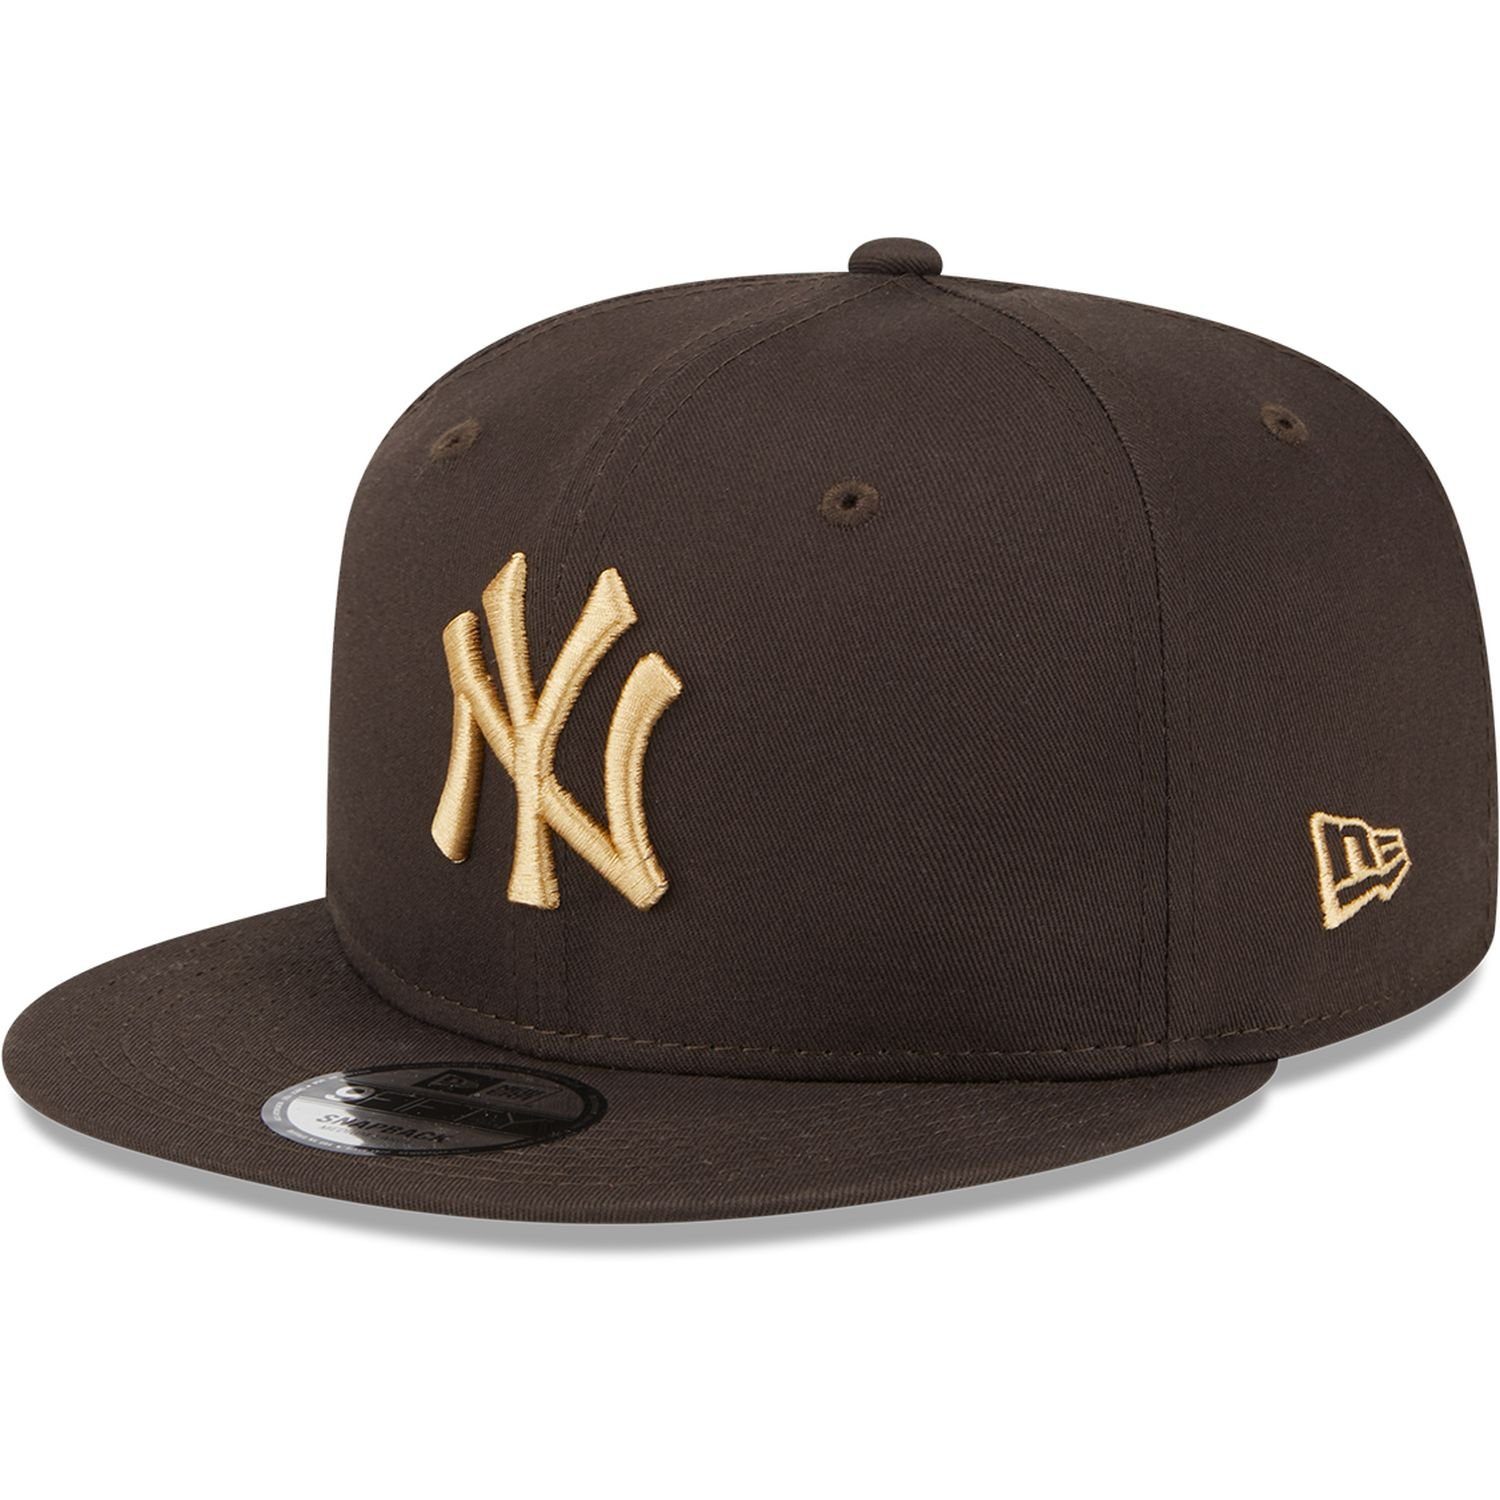 New New 9Fifty Era Cap Yankees Snapback York